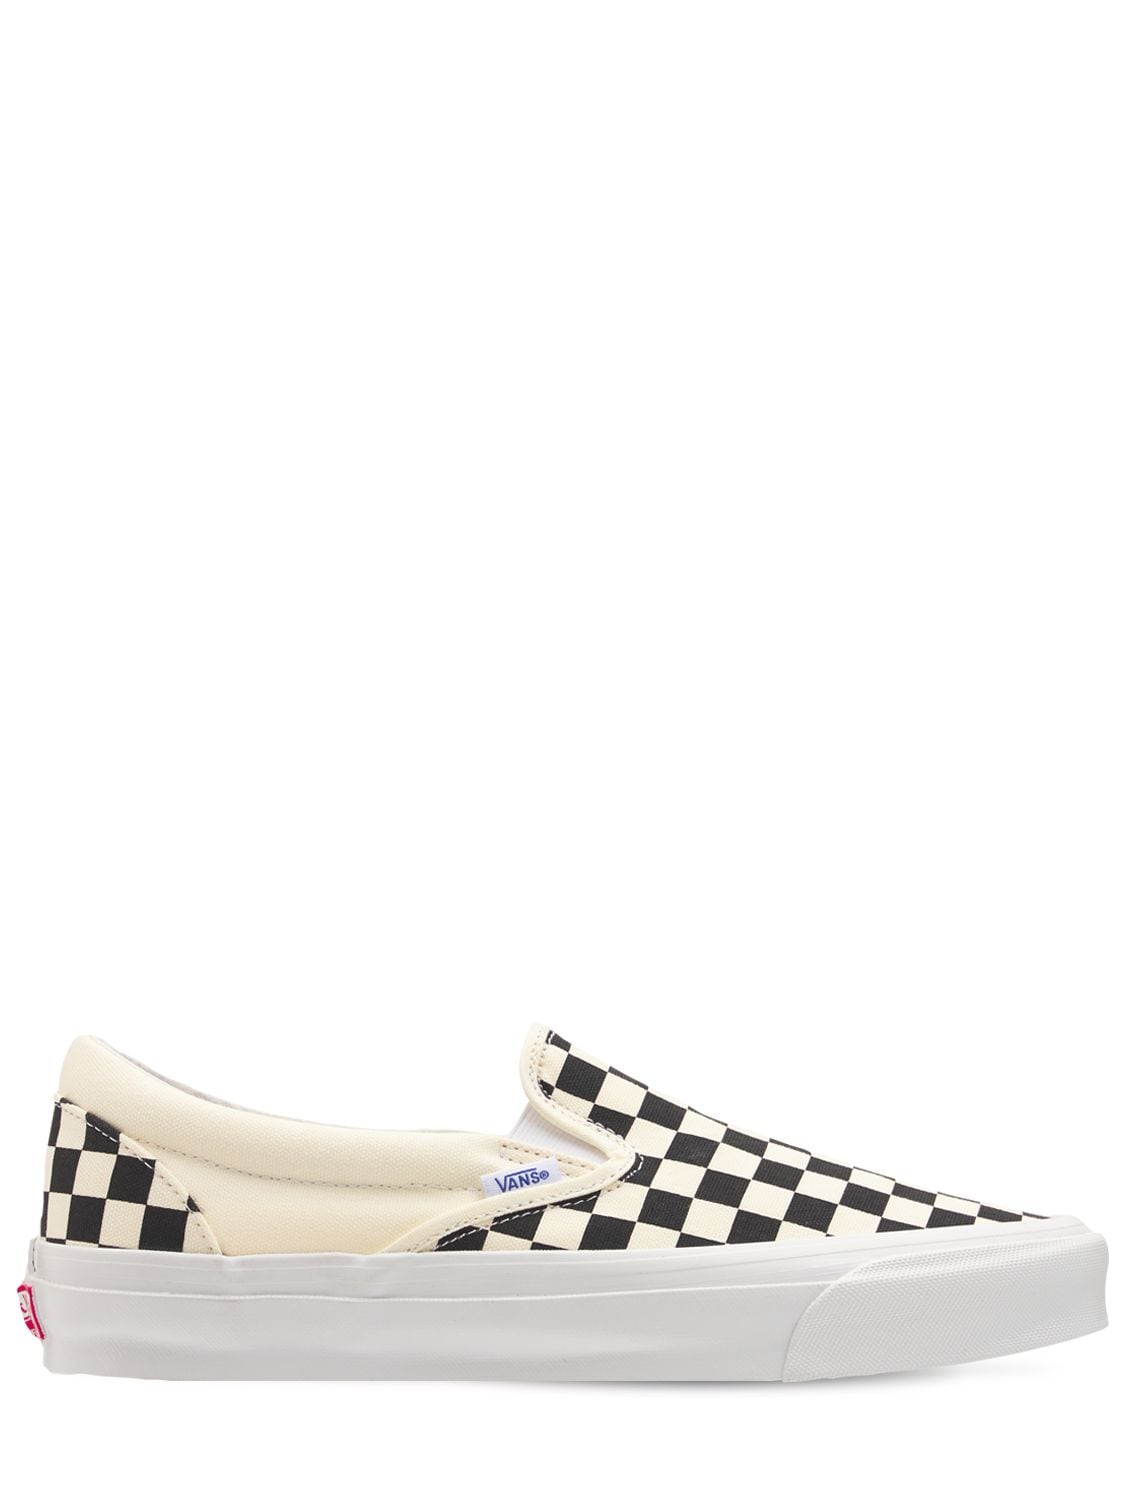 vans checkerboard shoes